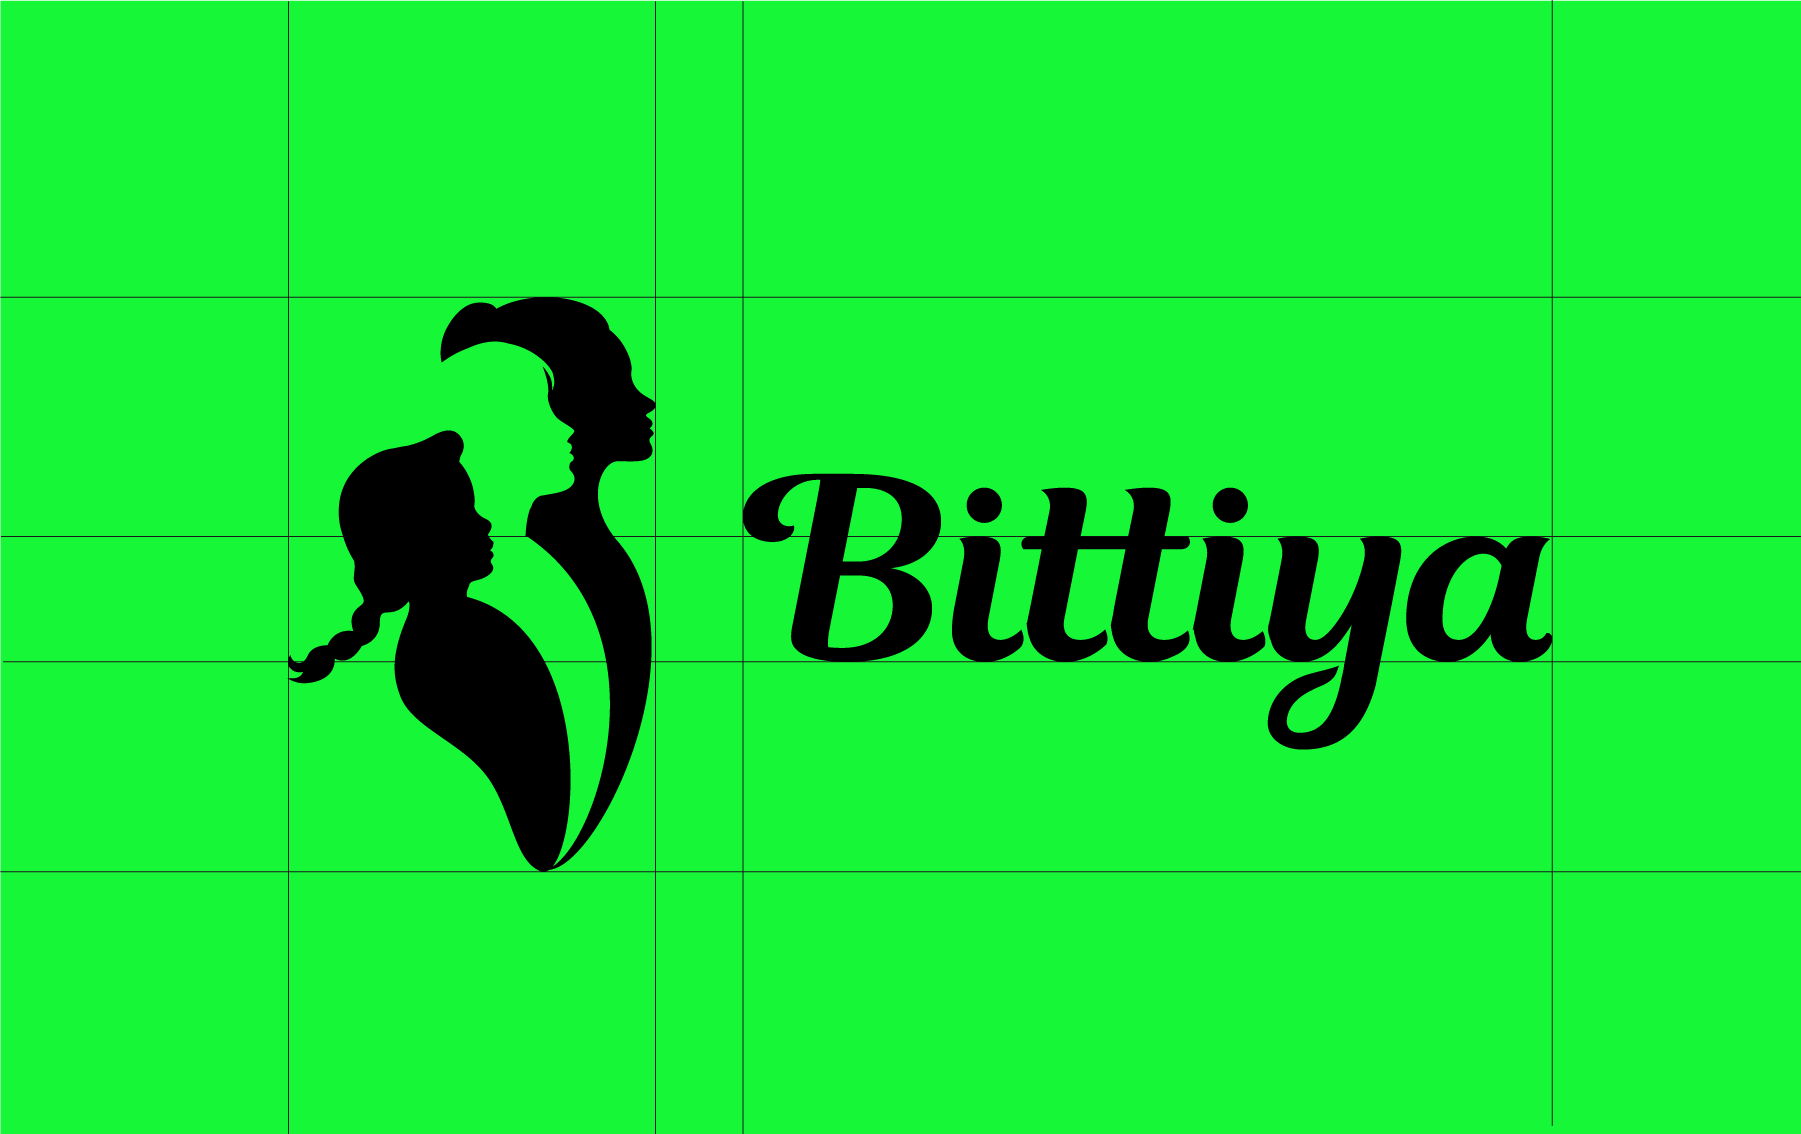 UI UX Design for Bittiya